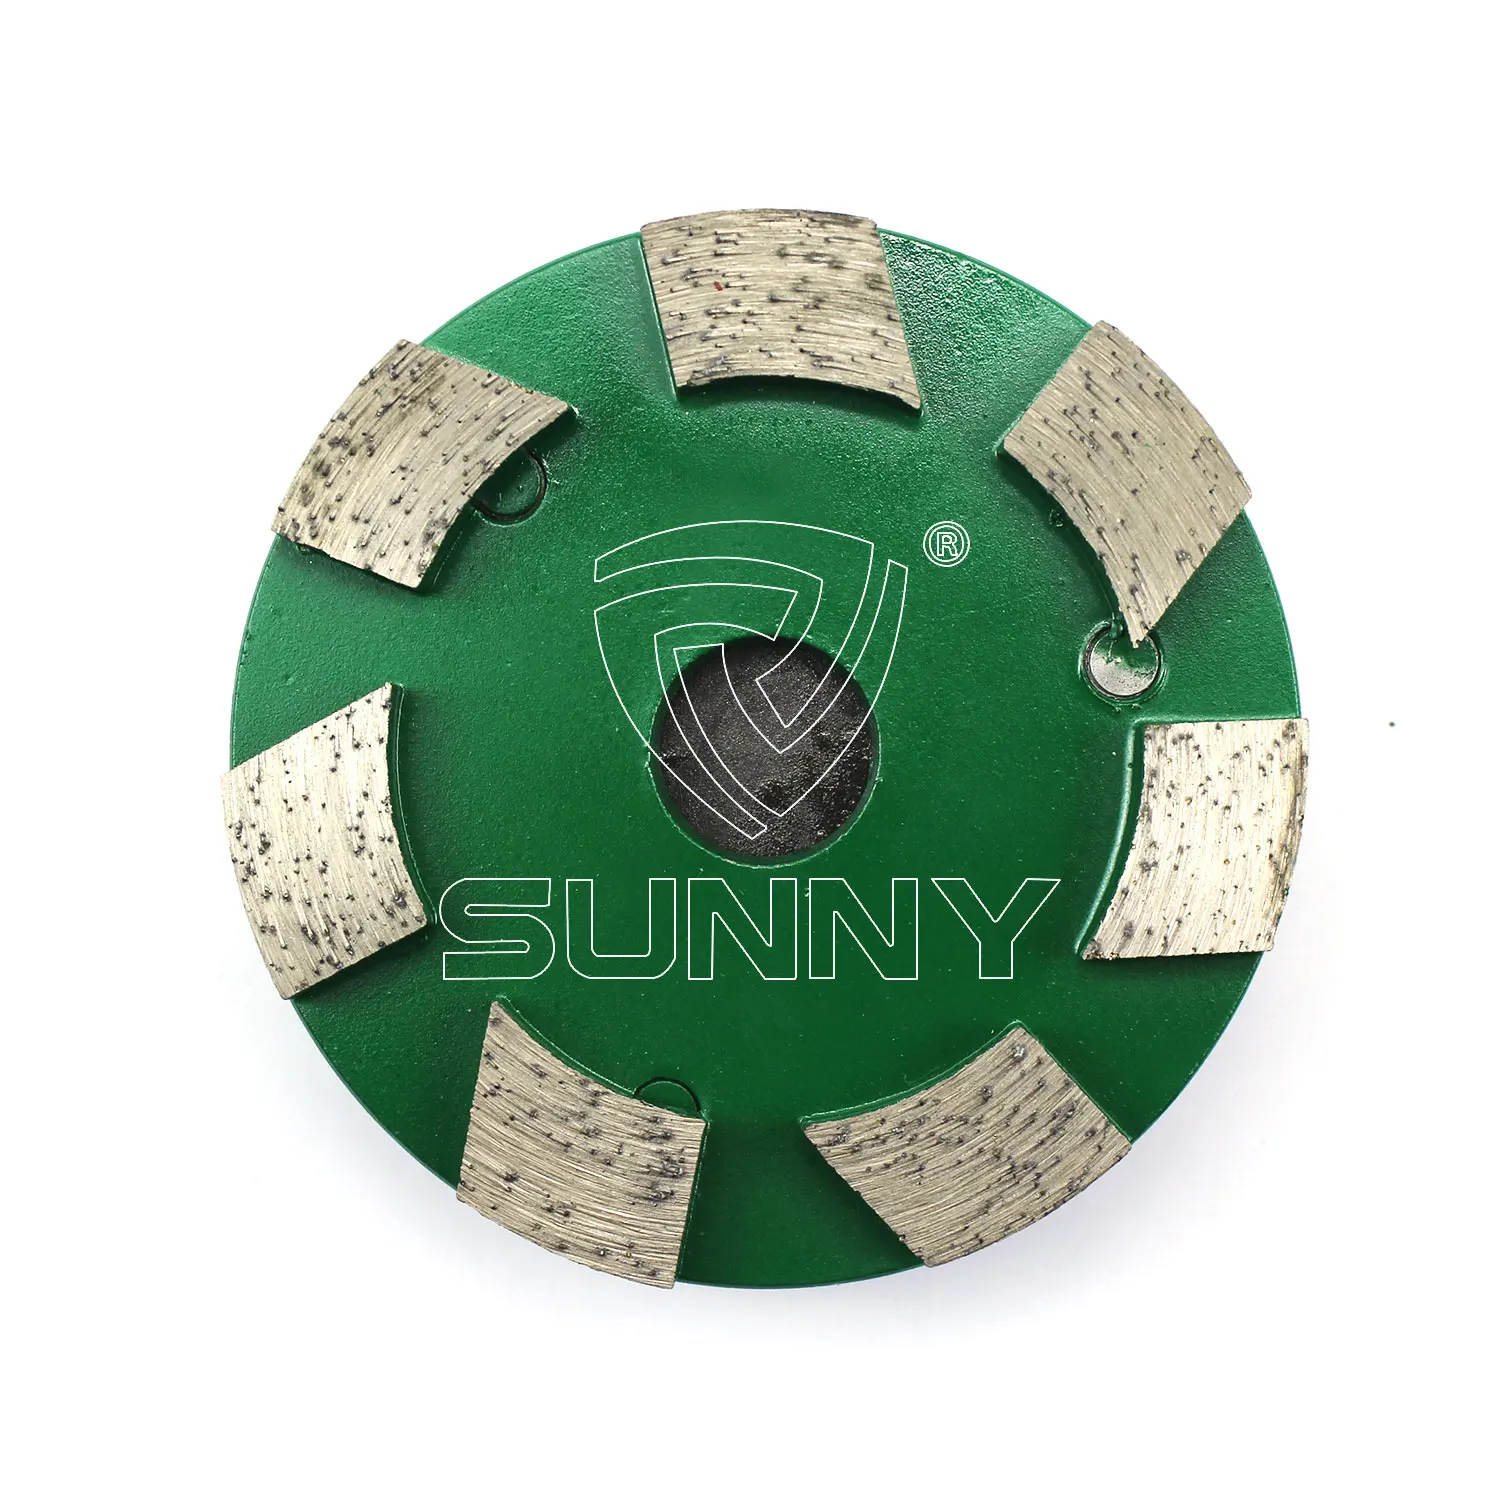 100mm Marble Diamond Grinding Wheel for Klindex